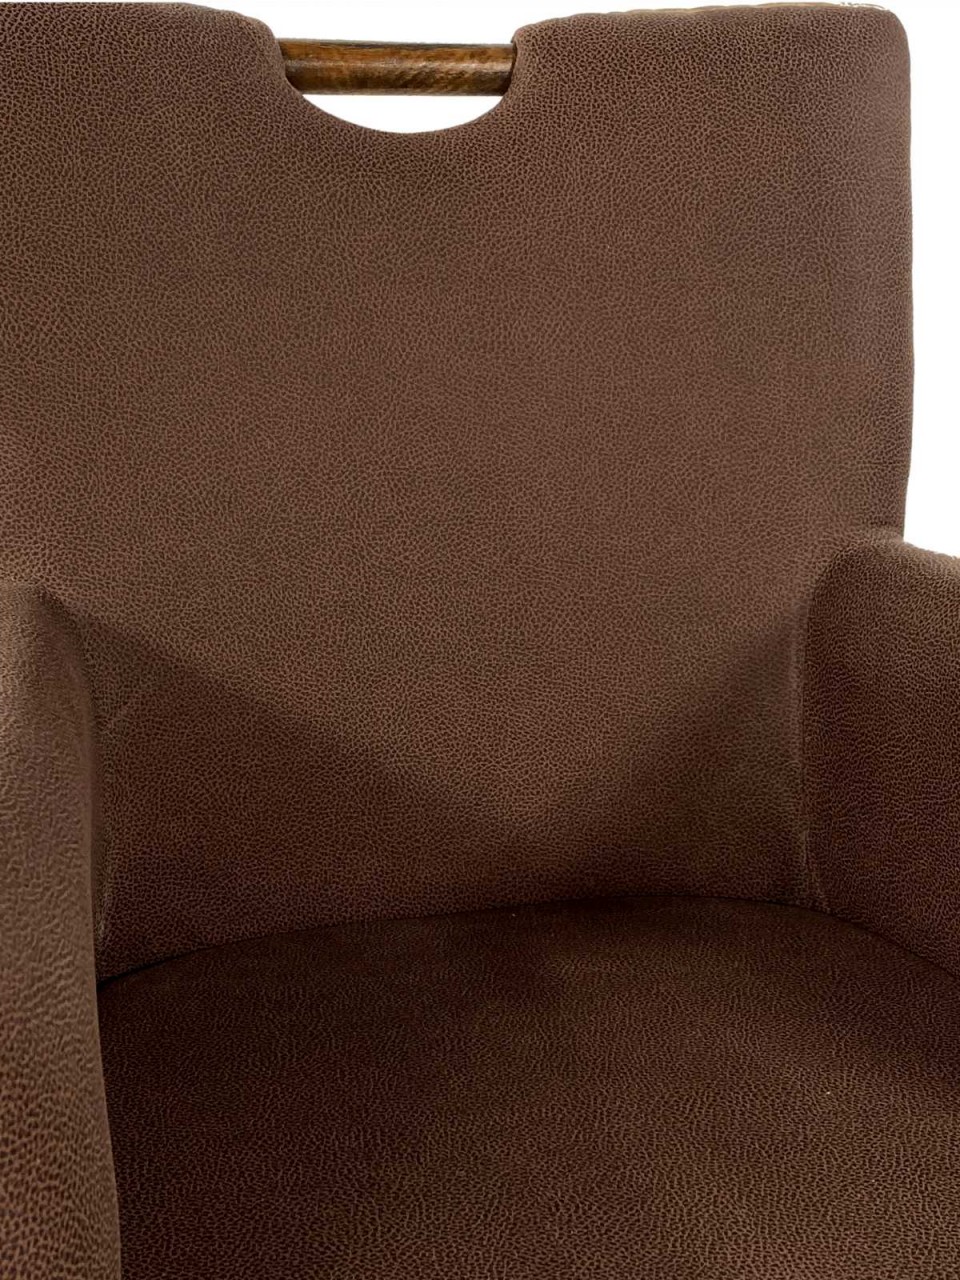 Esszimmer Stühle Set 6 Stück Rattan Armlehner Sessel Bilbao Polsterstuhl Polstersessel prairie brown